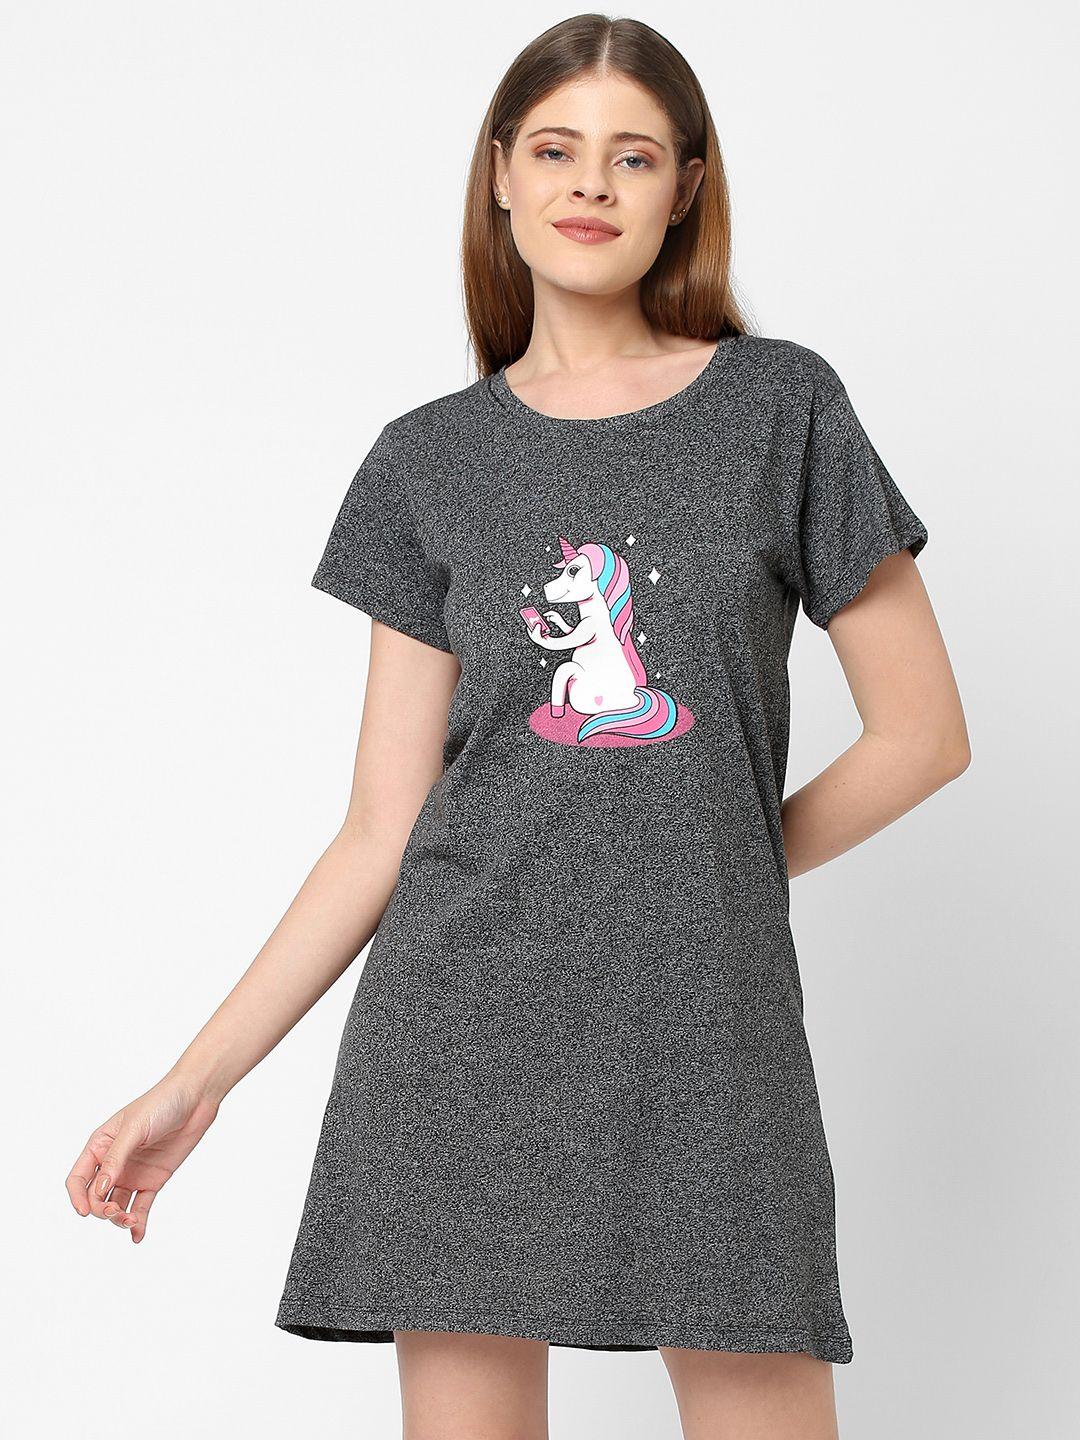 inner-sense-grey-printed-organic-cotton-t-shirt-nightdress